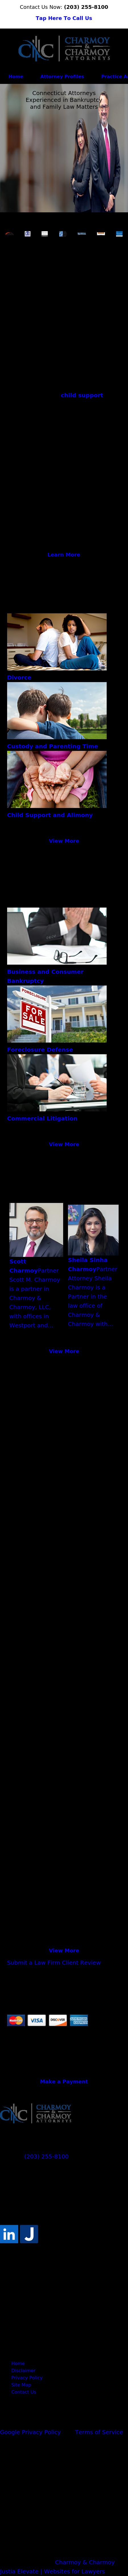 Charmoy Sheila S - Fairfield CT Lawyers